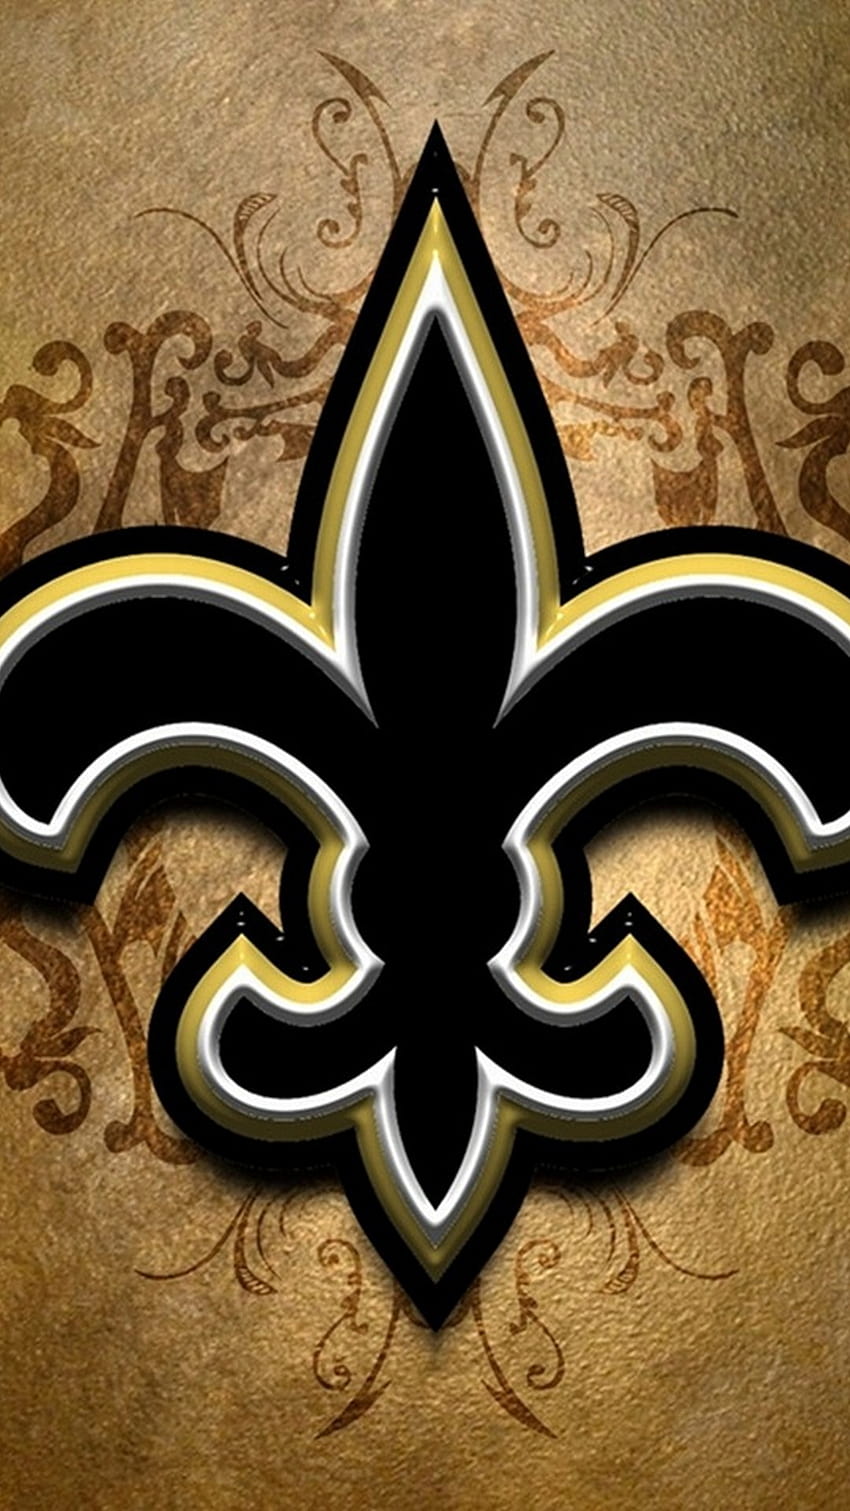 New Orleans Saints on Twitter New Akamara6 wallpaper  Saints  httpstcofcZ6qRgeRI  Twitter